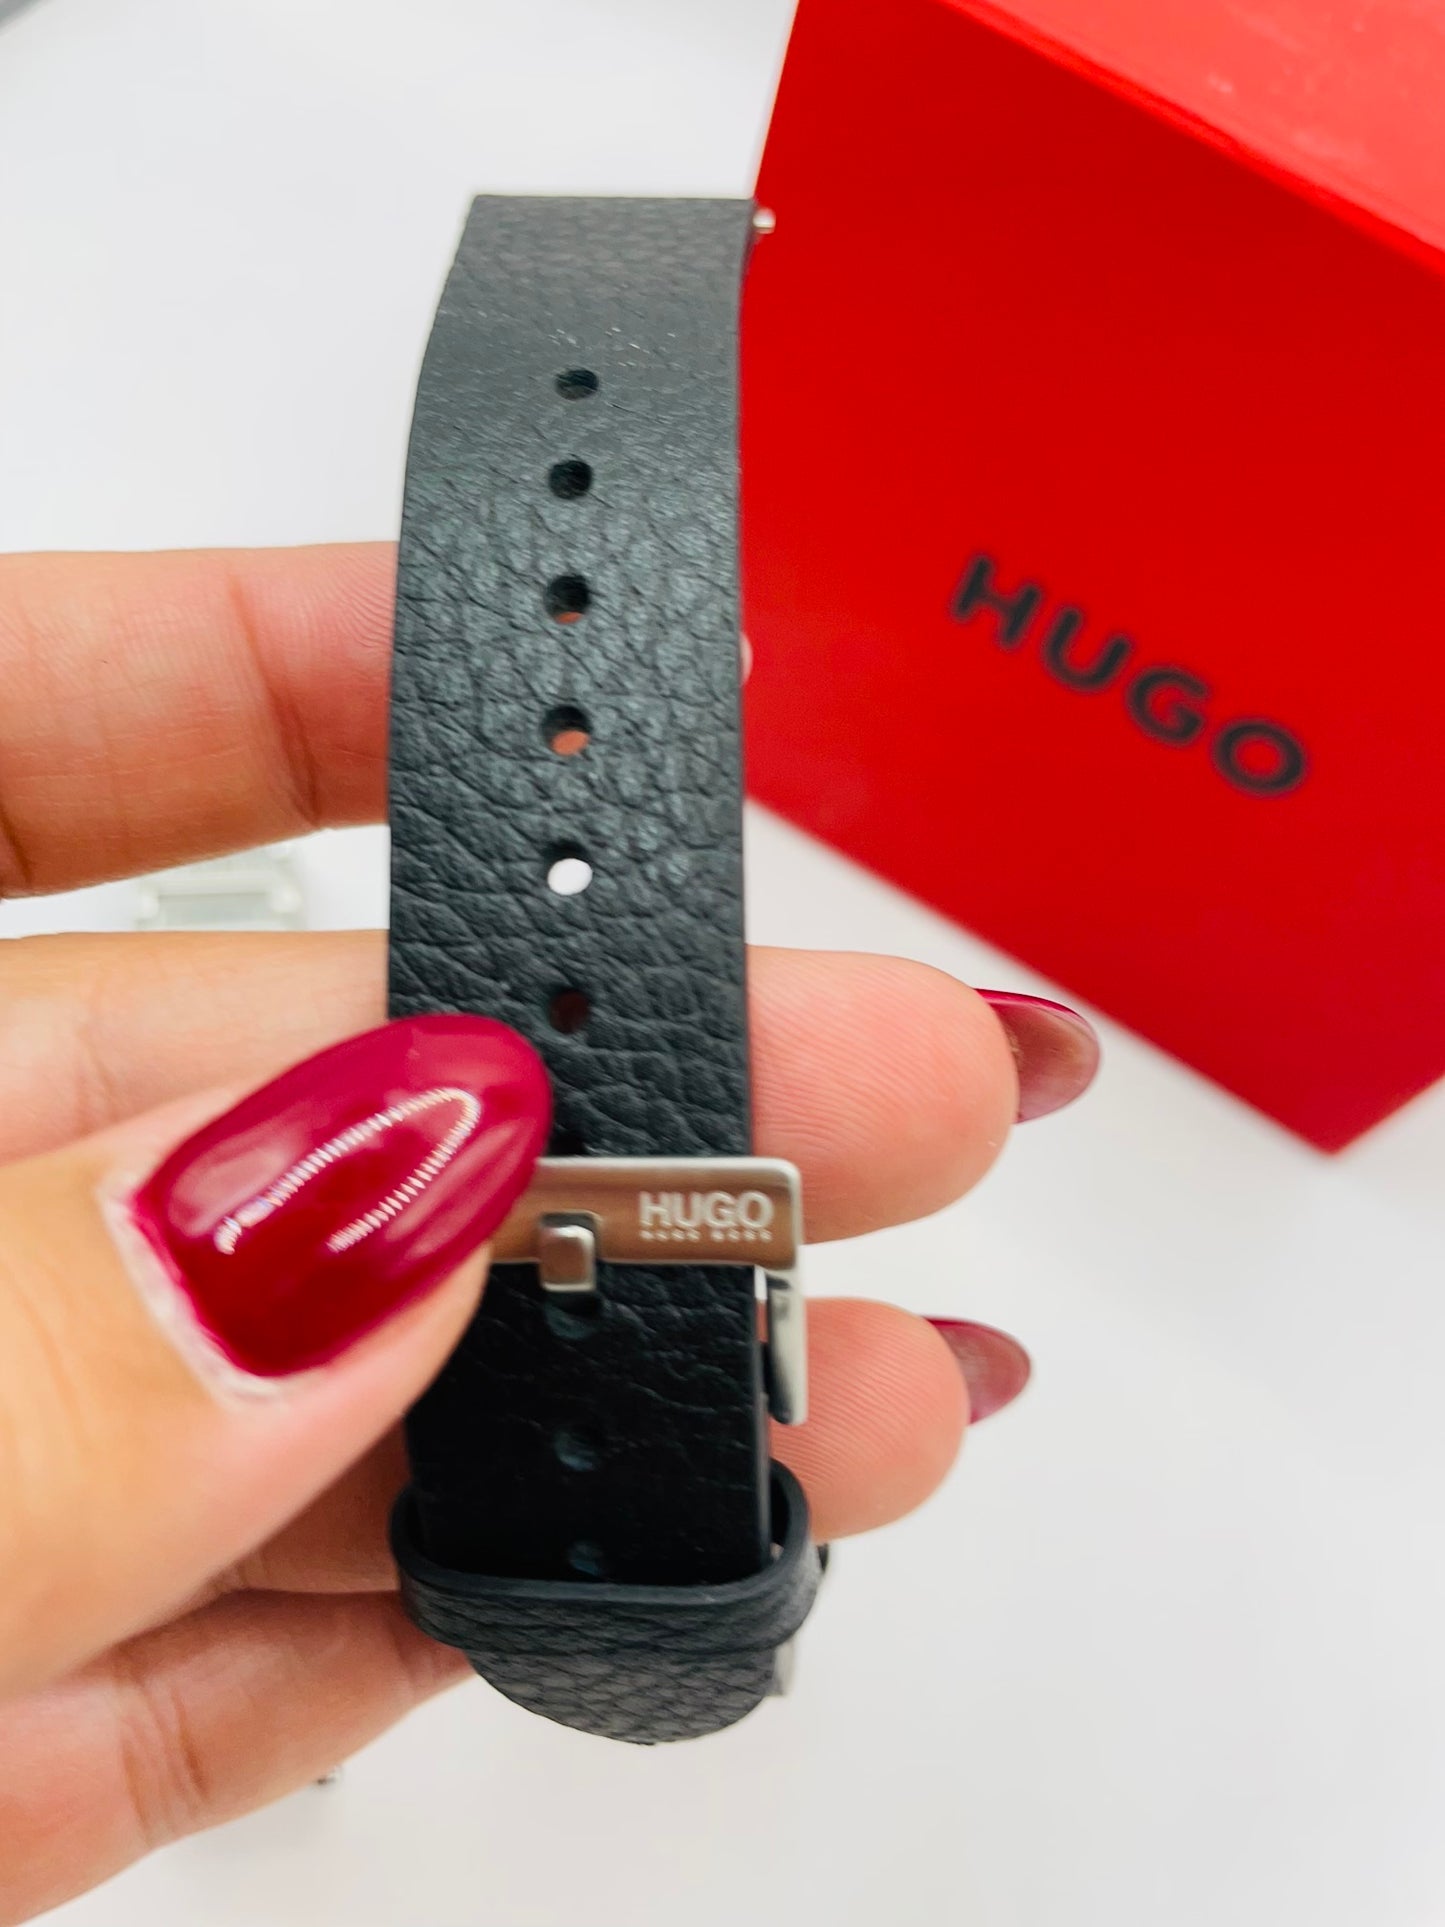 Hugo boss watch set